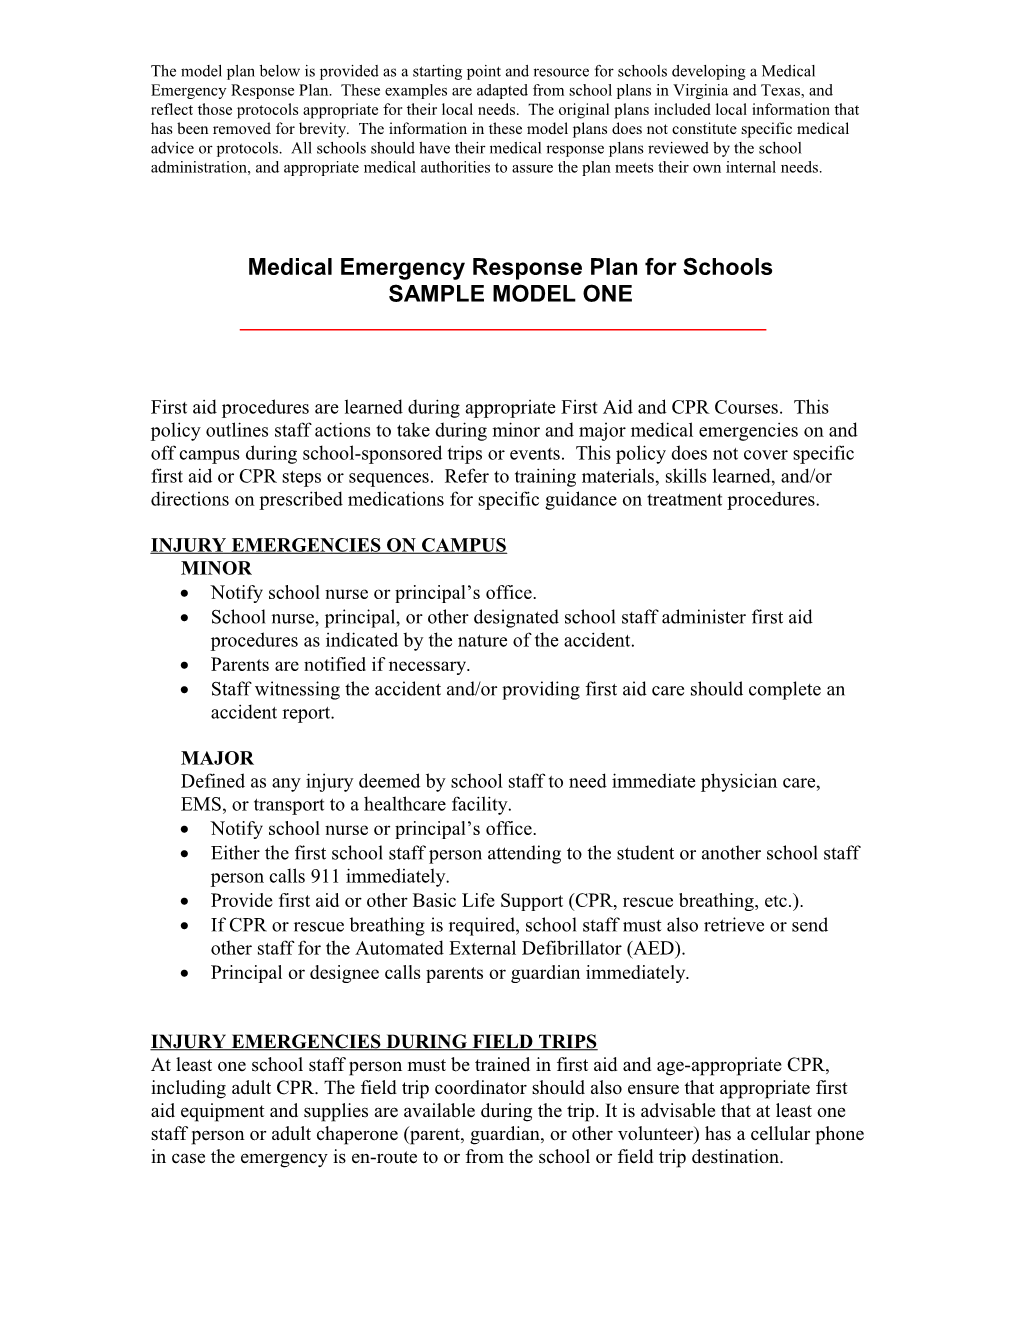 Medical Emergency Response Plan for Schools